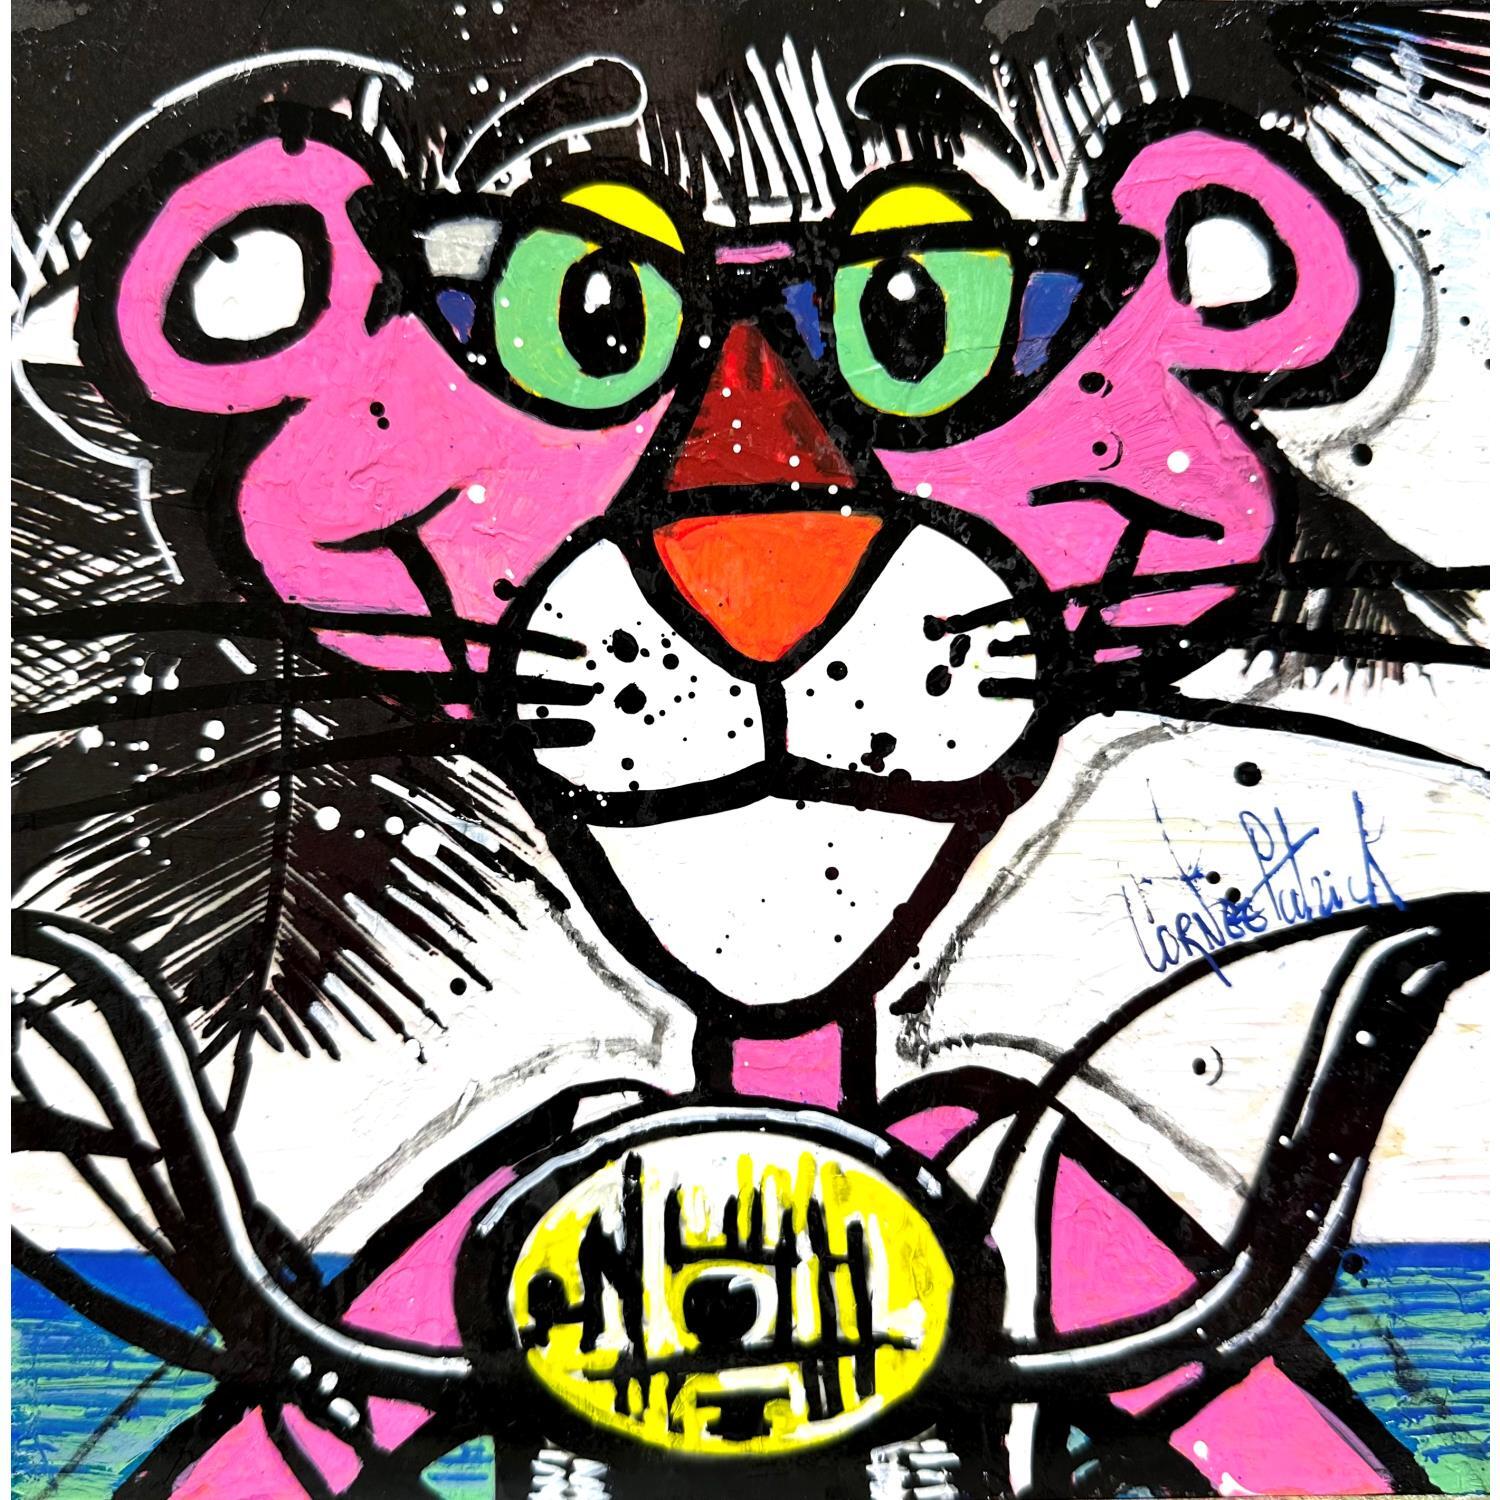 Pink Panther Pop Art Painting 